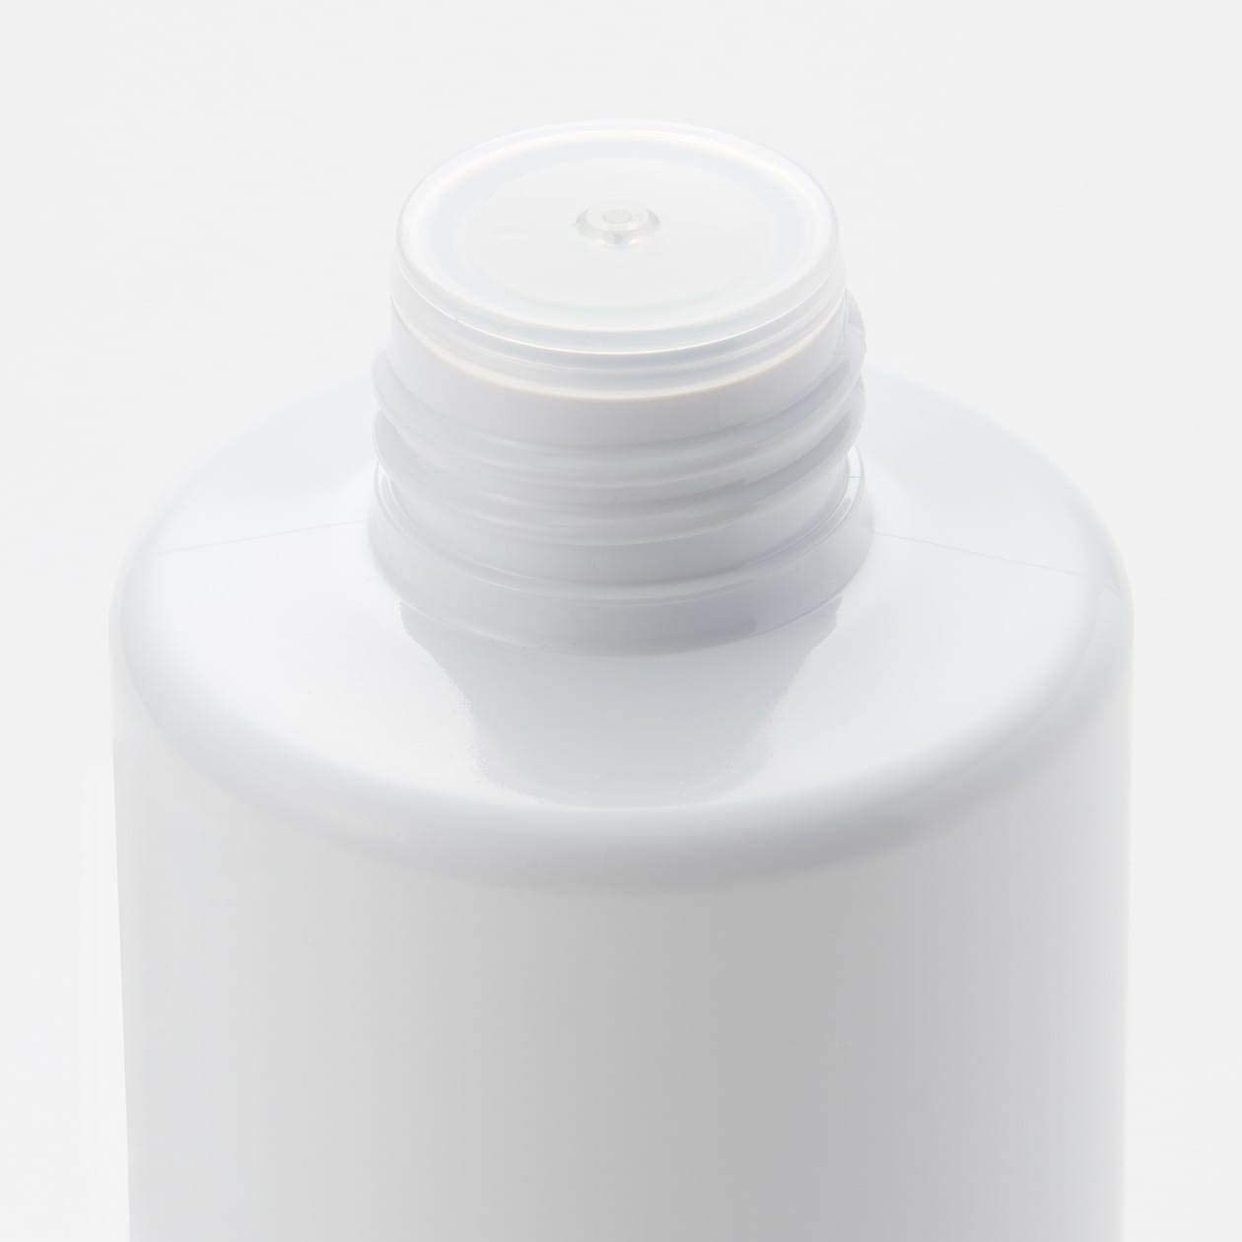 無印良品(MUJI) 敏感肌用薬用美白化粧水の商品画像2 